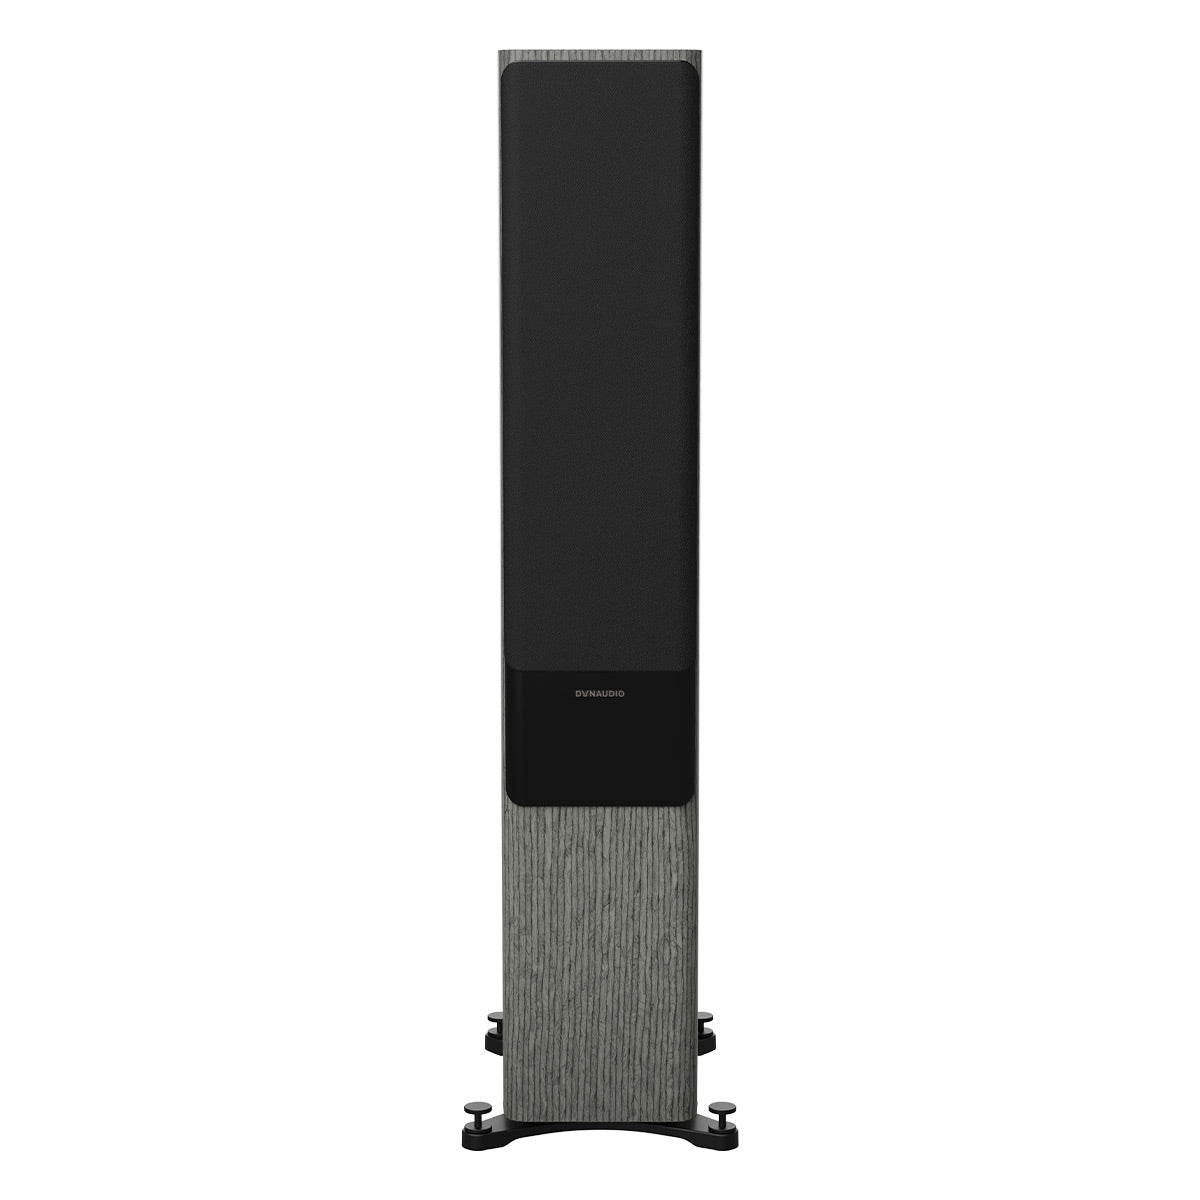 Dynaudio Contour 60i Floorstanding Speaker (Nordic Silver)